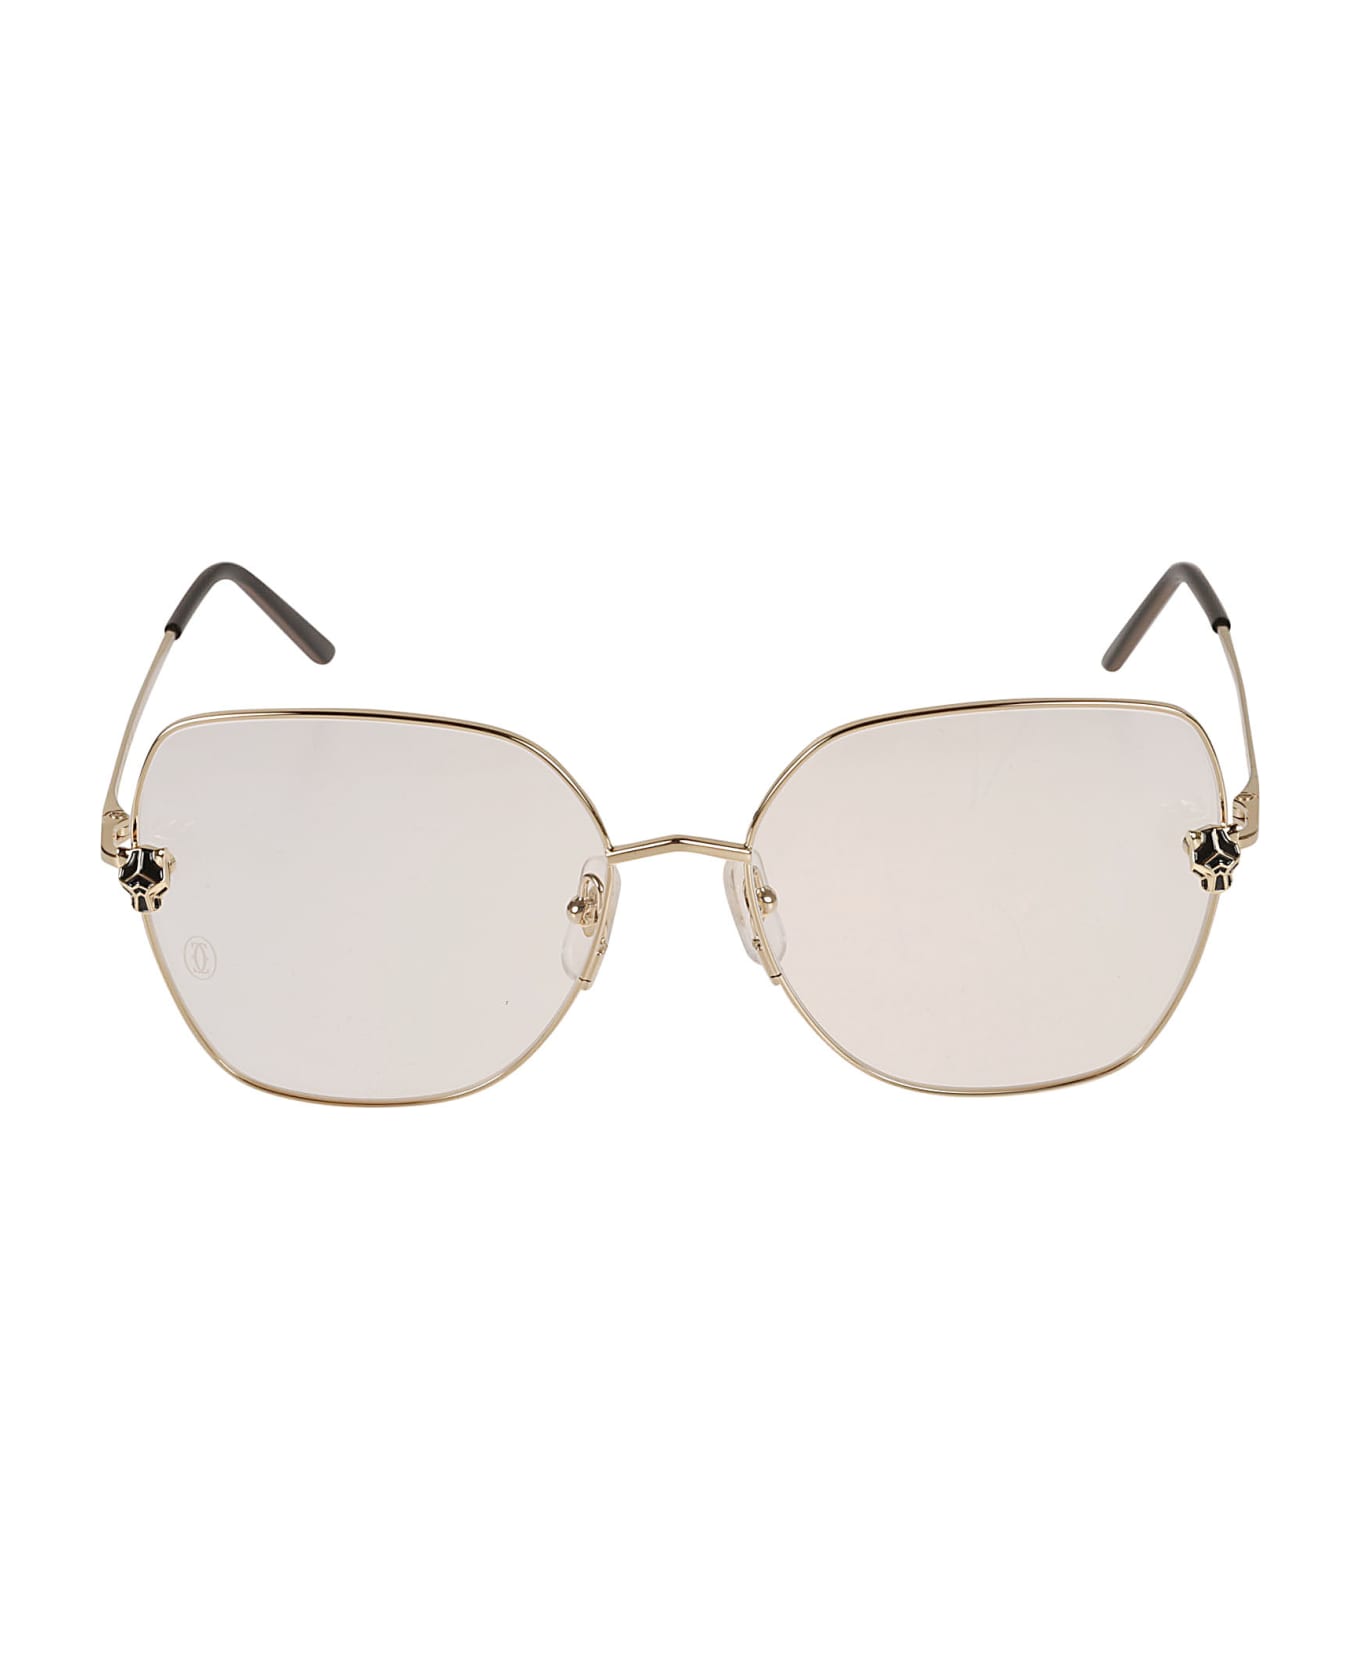 Cartier Eyewear Rimless Square Sunglasses - Gold